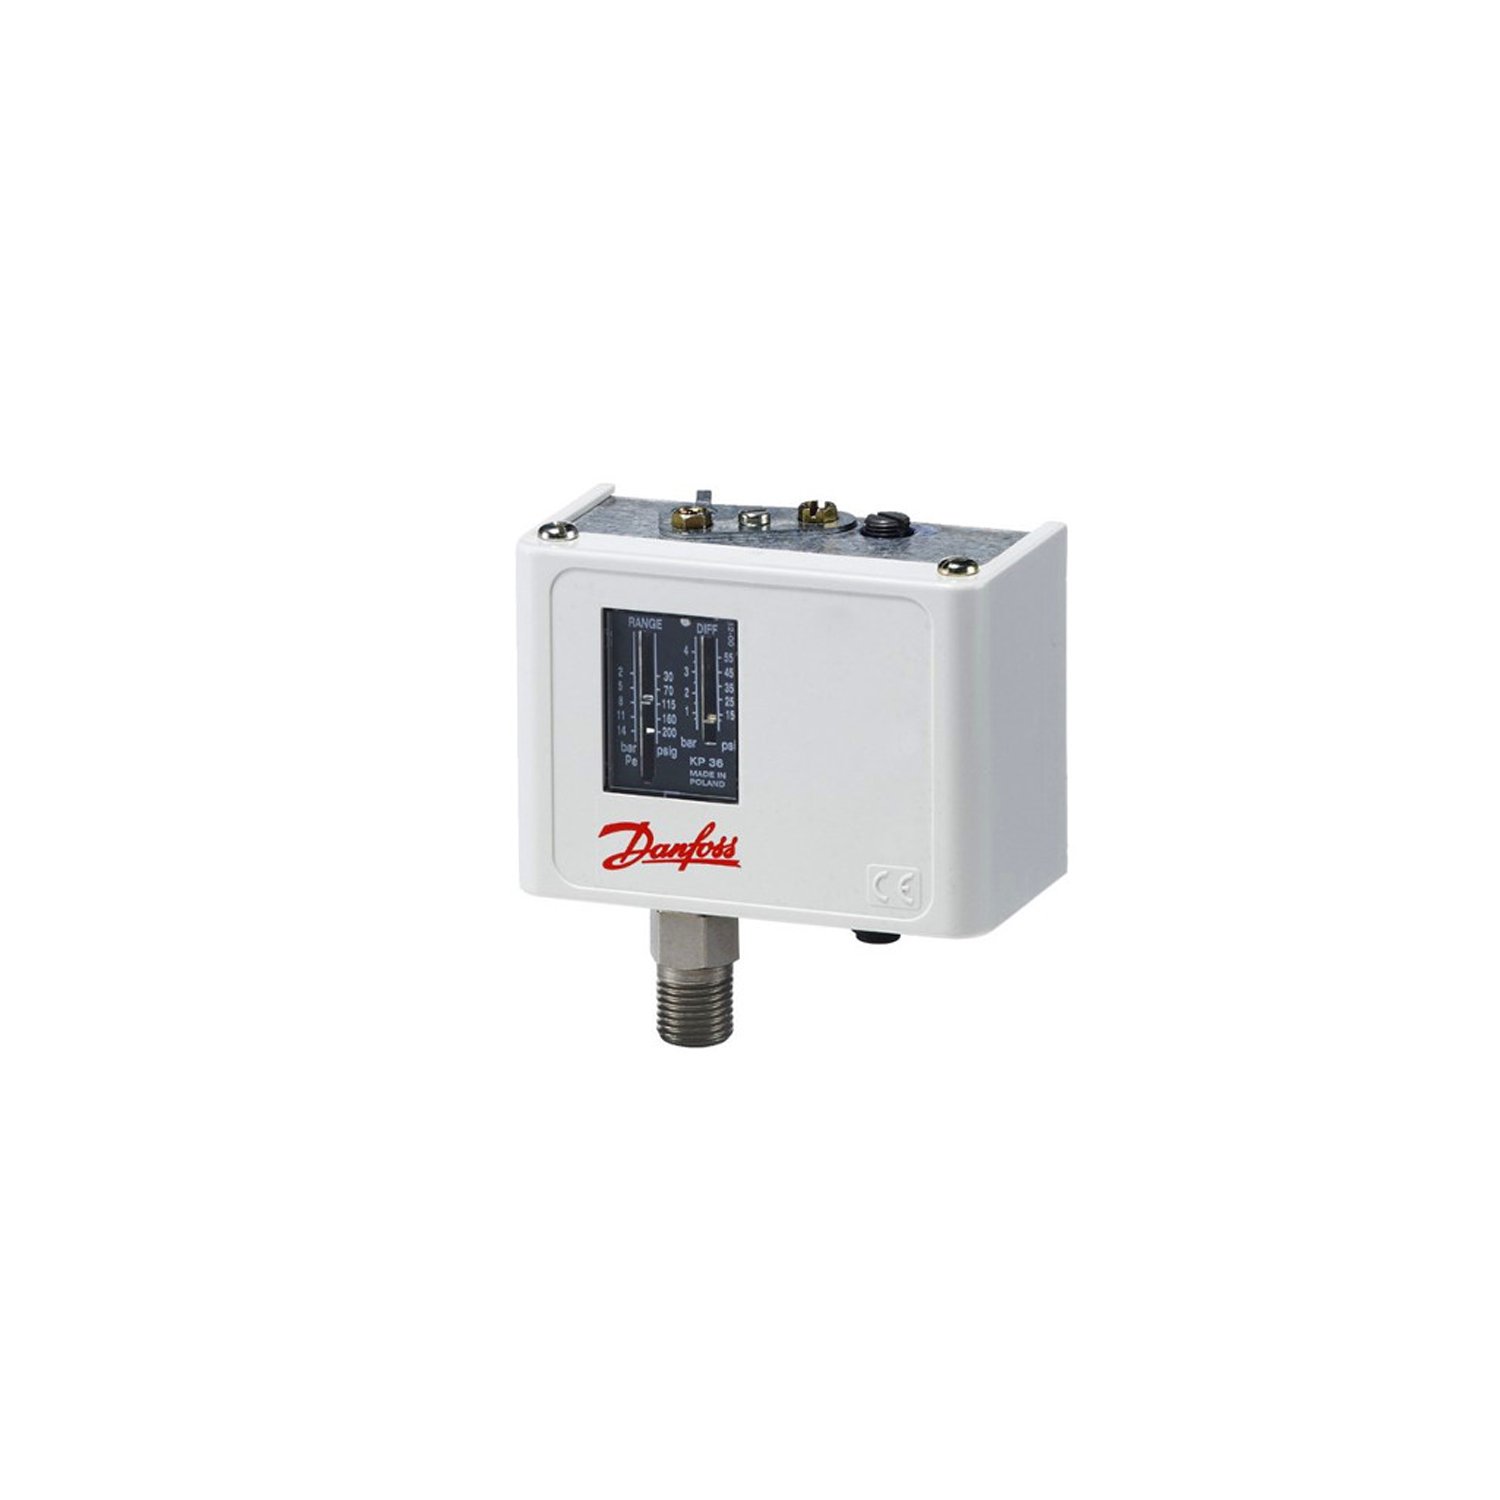 Pressure switch Danfoss KP1 060-110966, solder version, manual reset